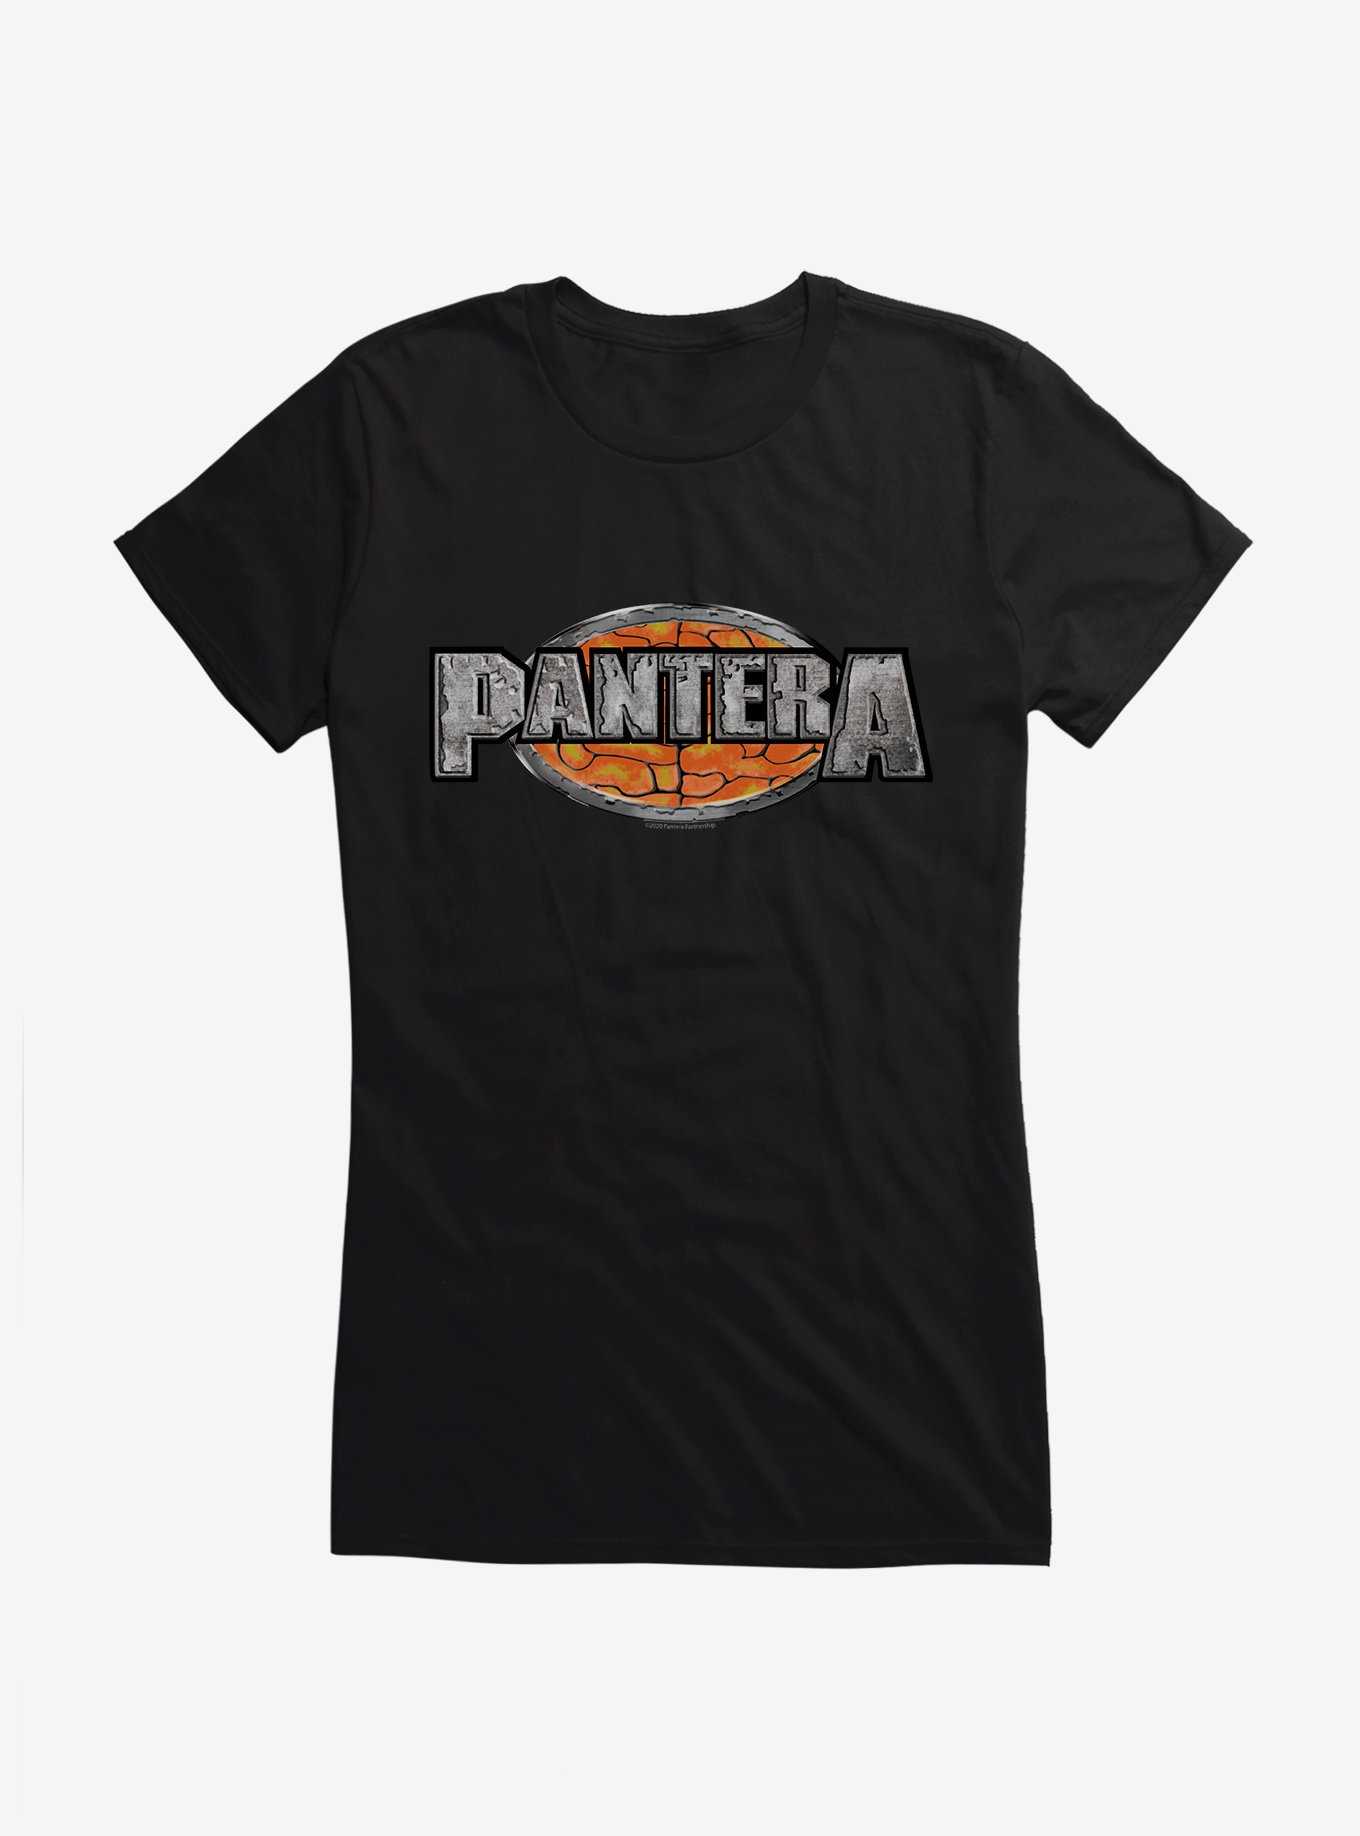 Pantera Reinventing The Steel Girls T-Shirt, , hi-res